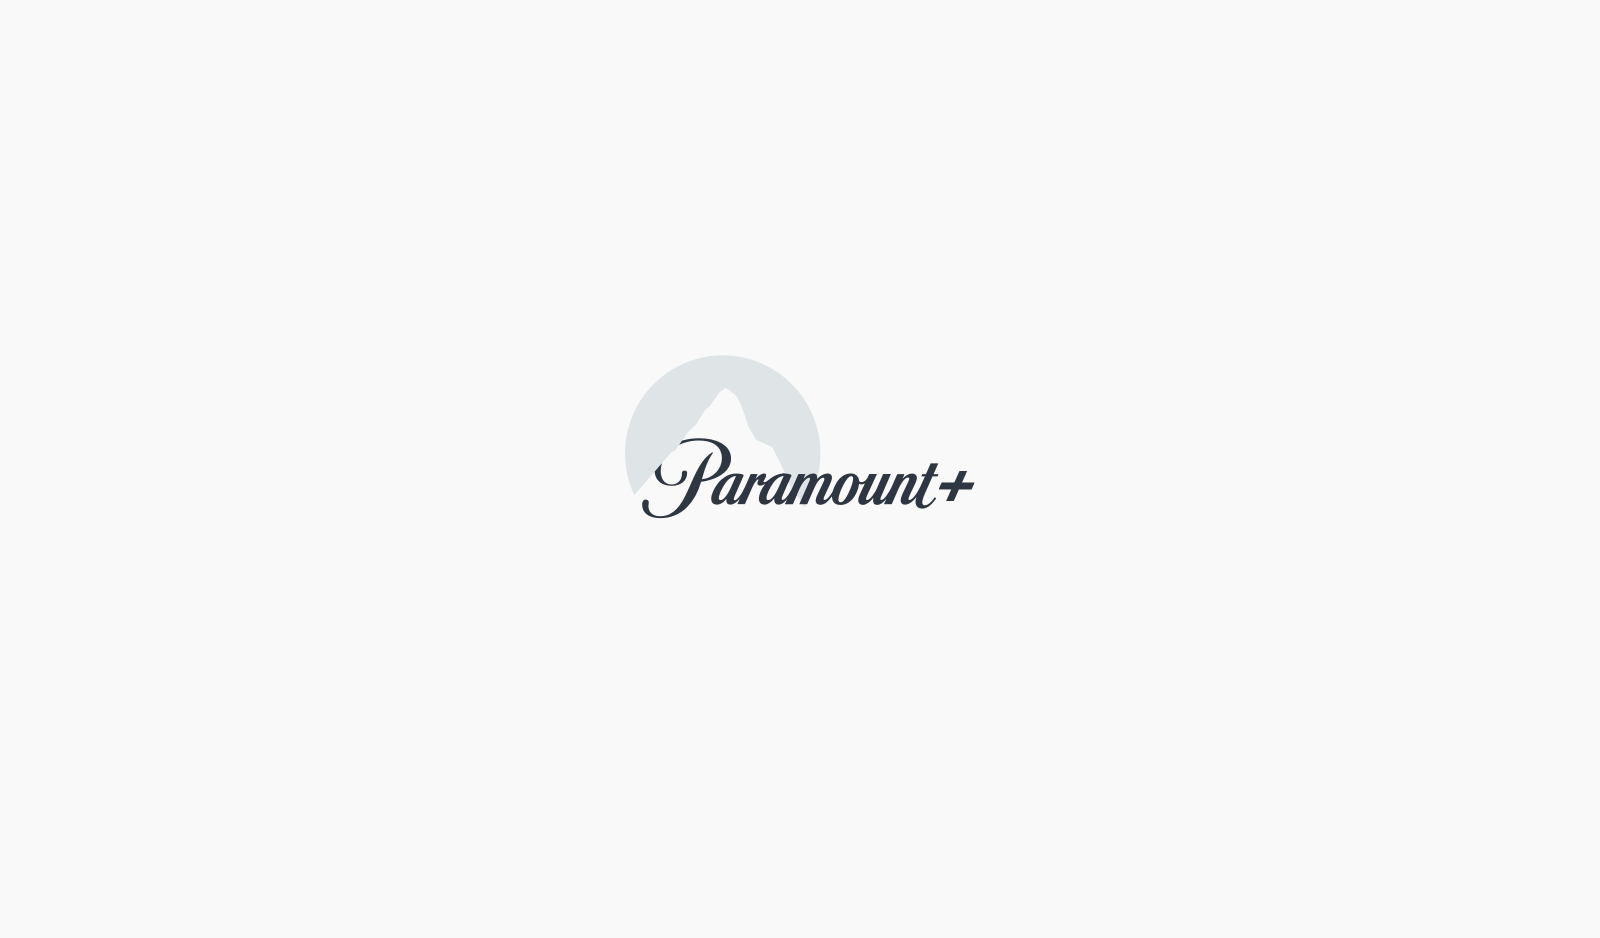 Paramount_01